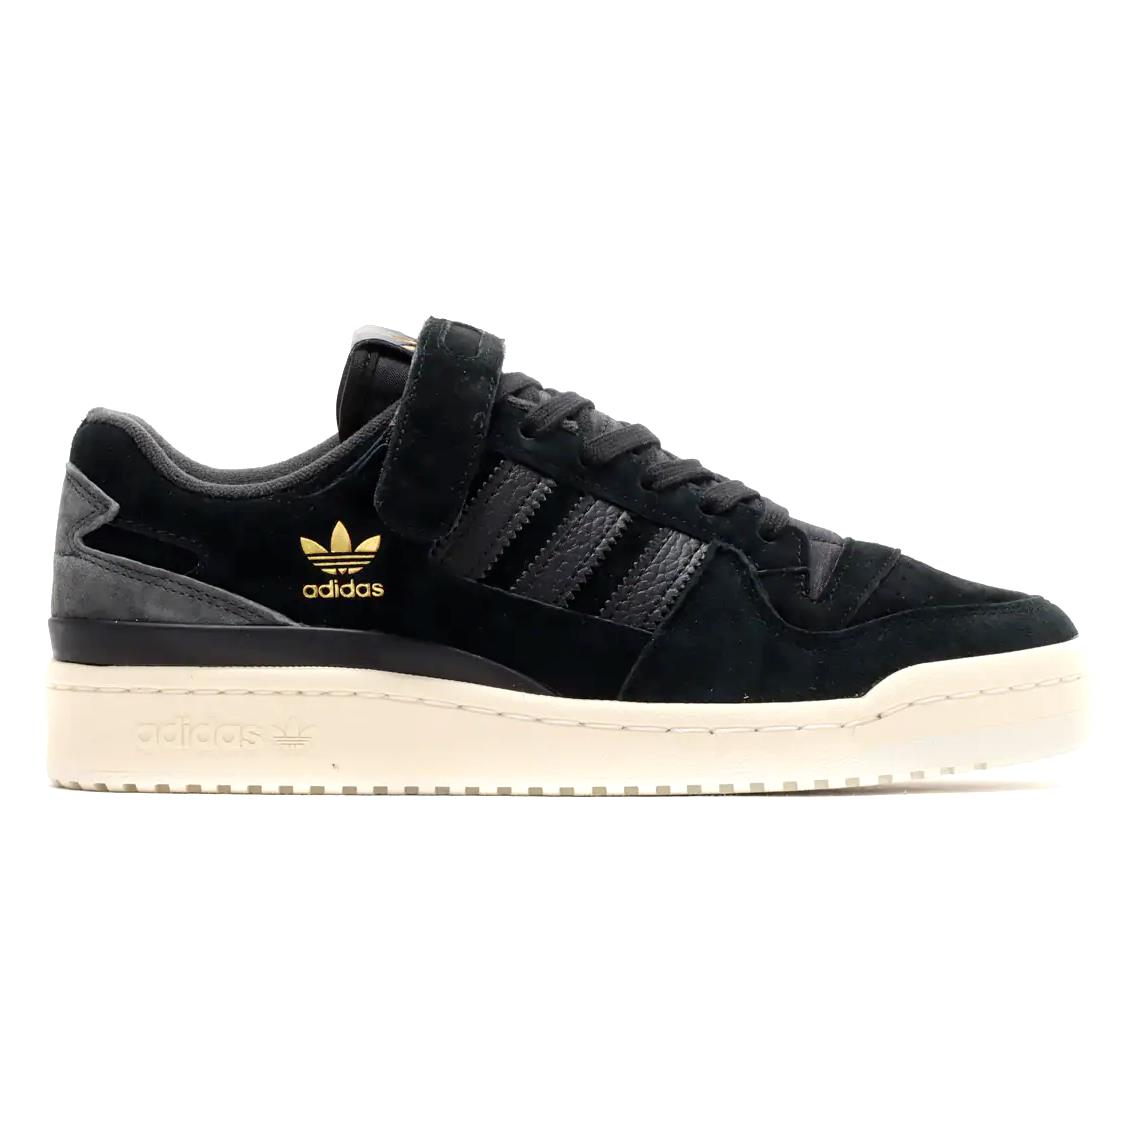 Mens Adidas Forum 84 Low Originals Black Gold Casual Basketball Athletic Shoes